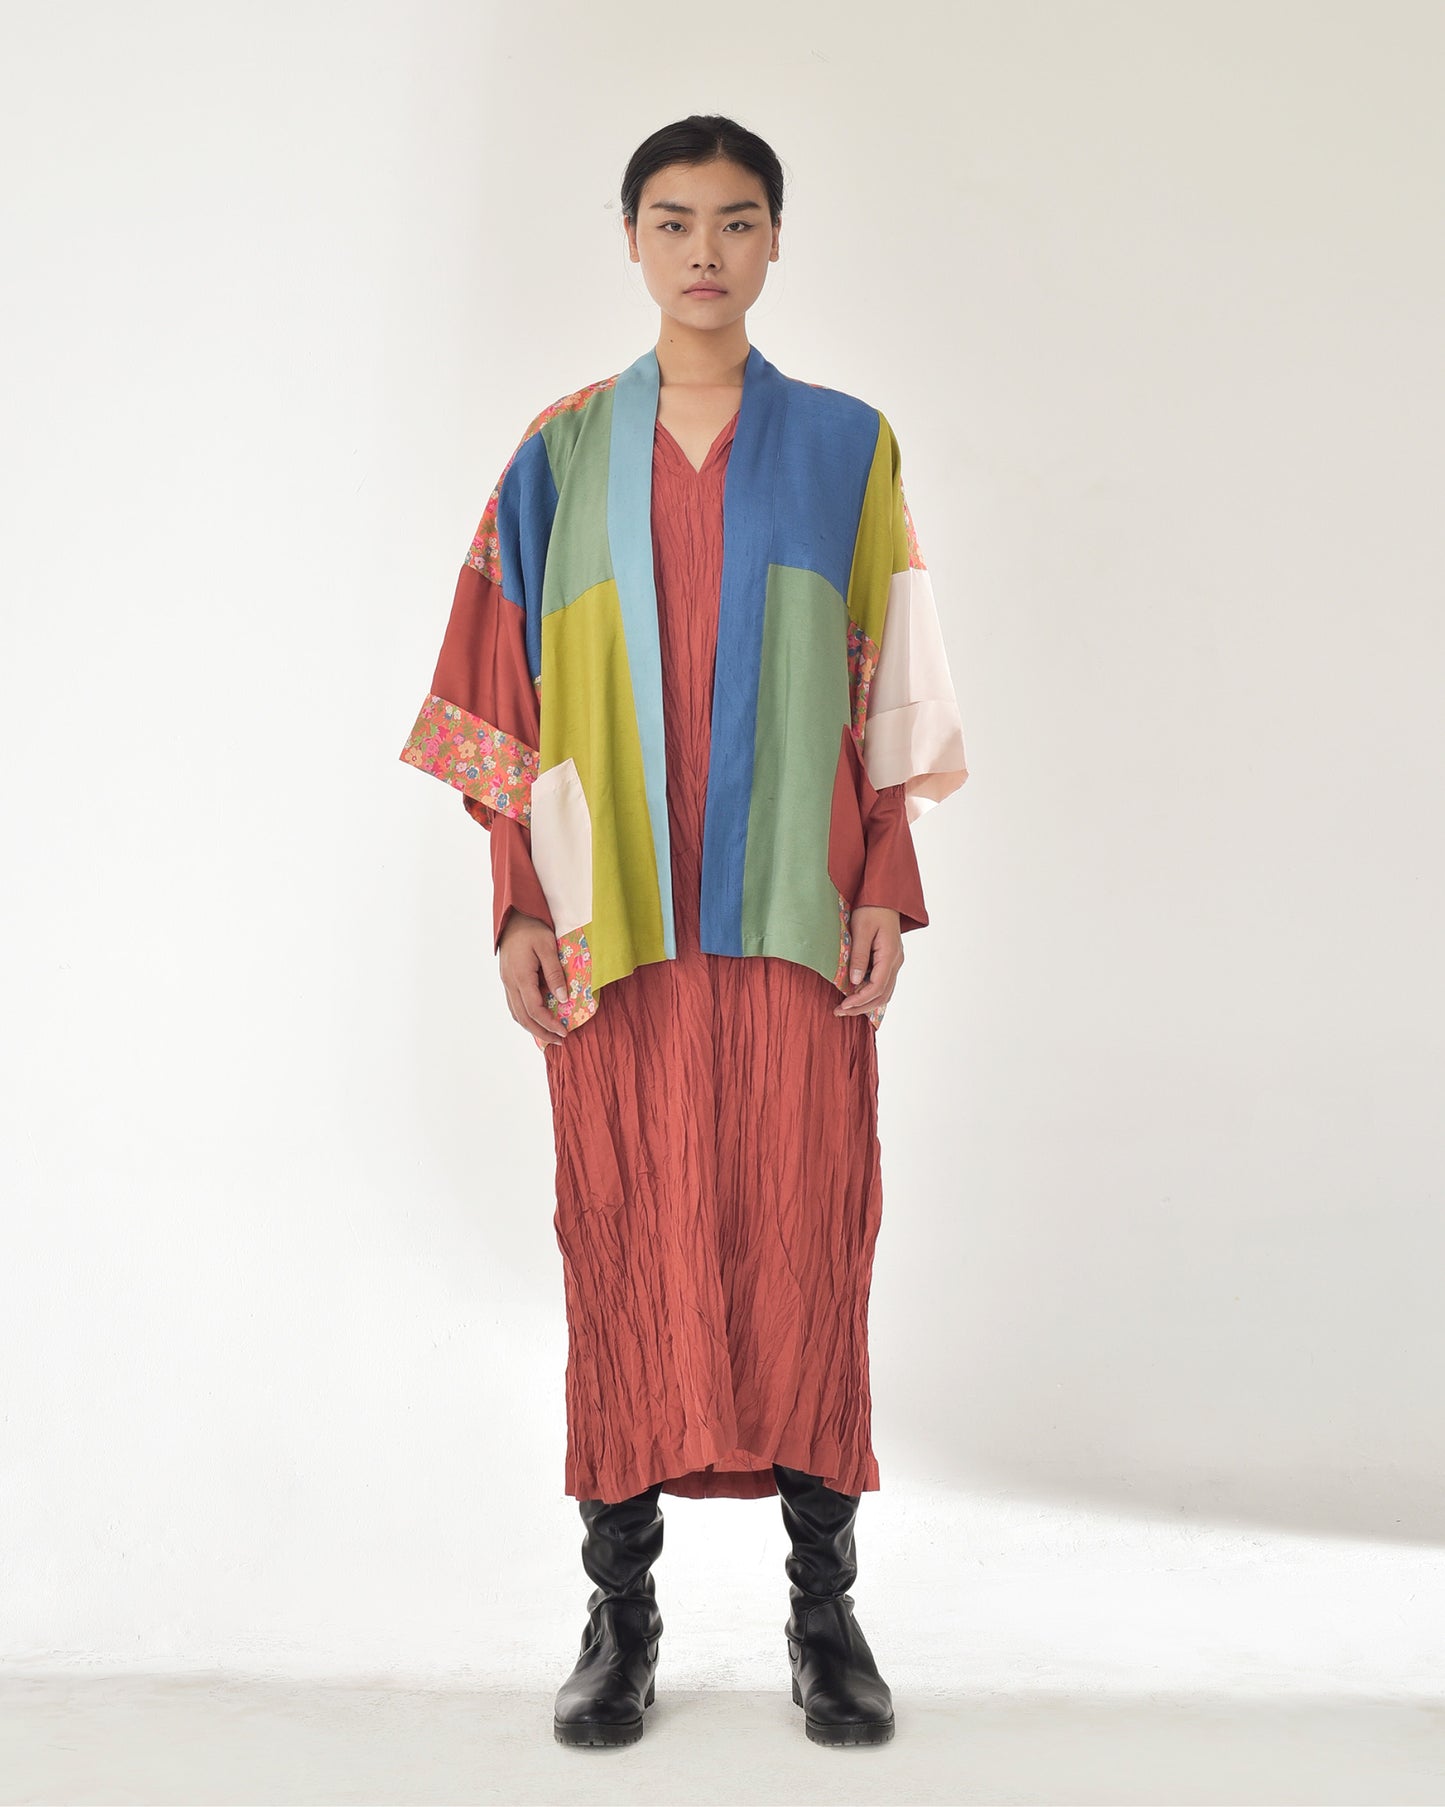 Kimono Đồng Bằng